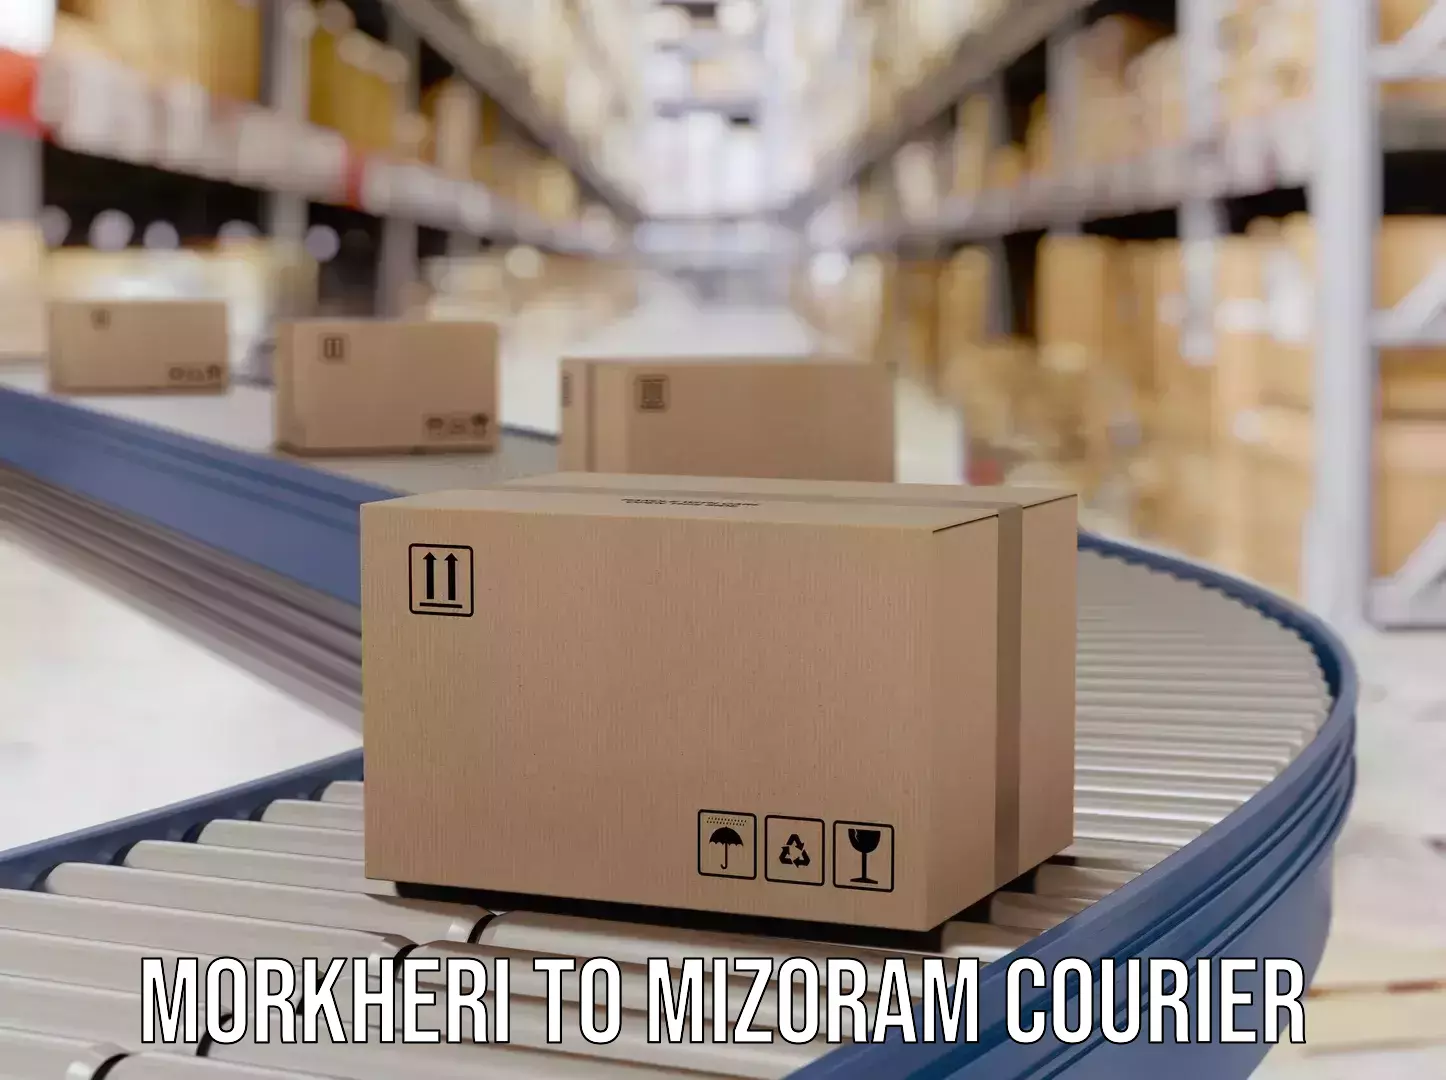 24/7 courier service Morkheri to Mizoram